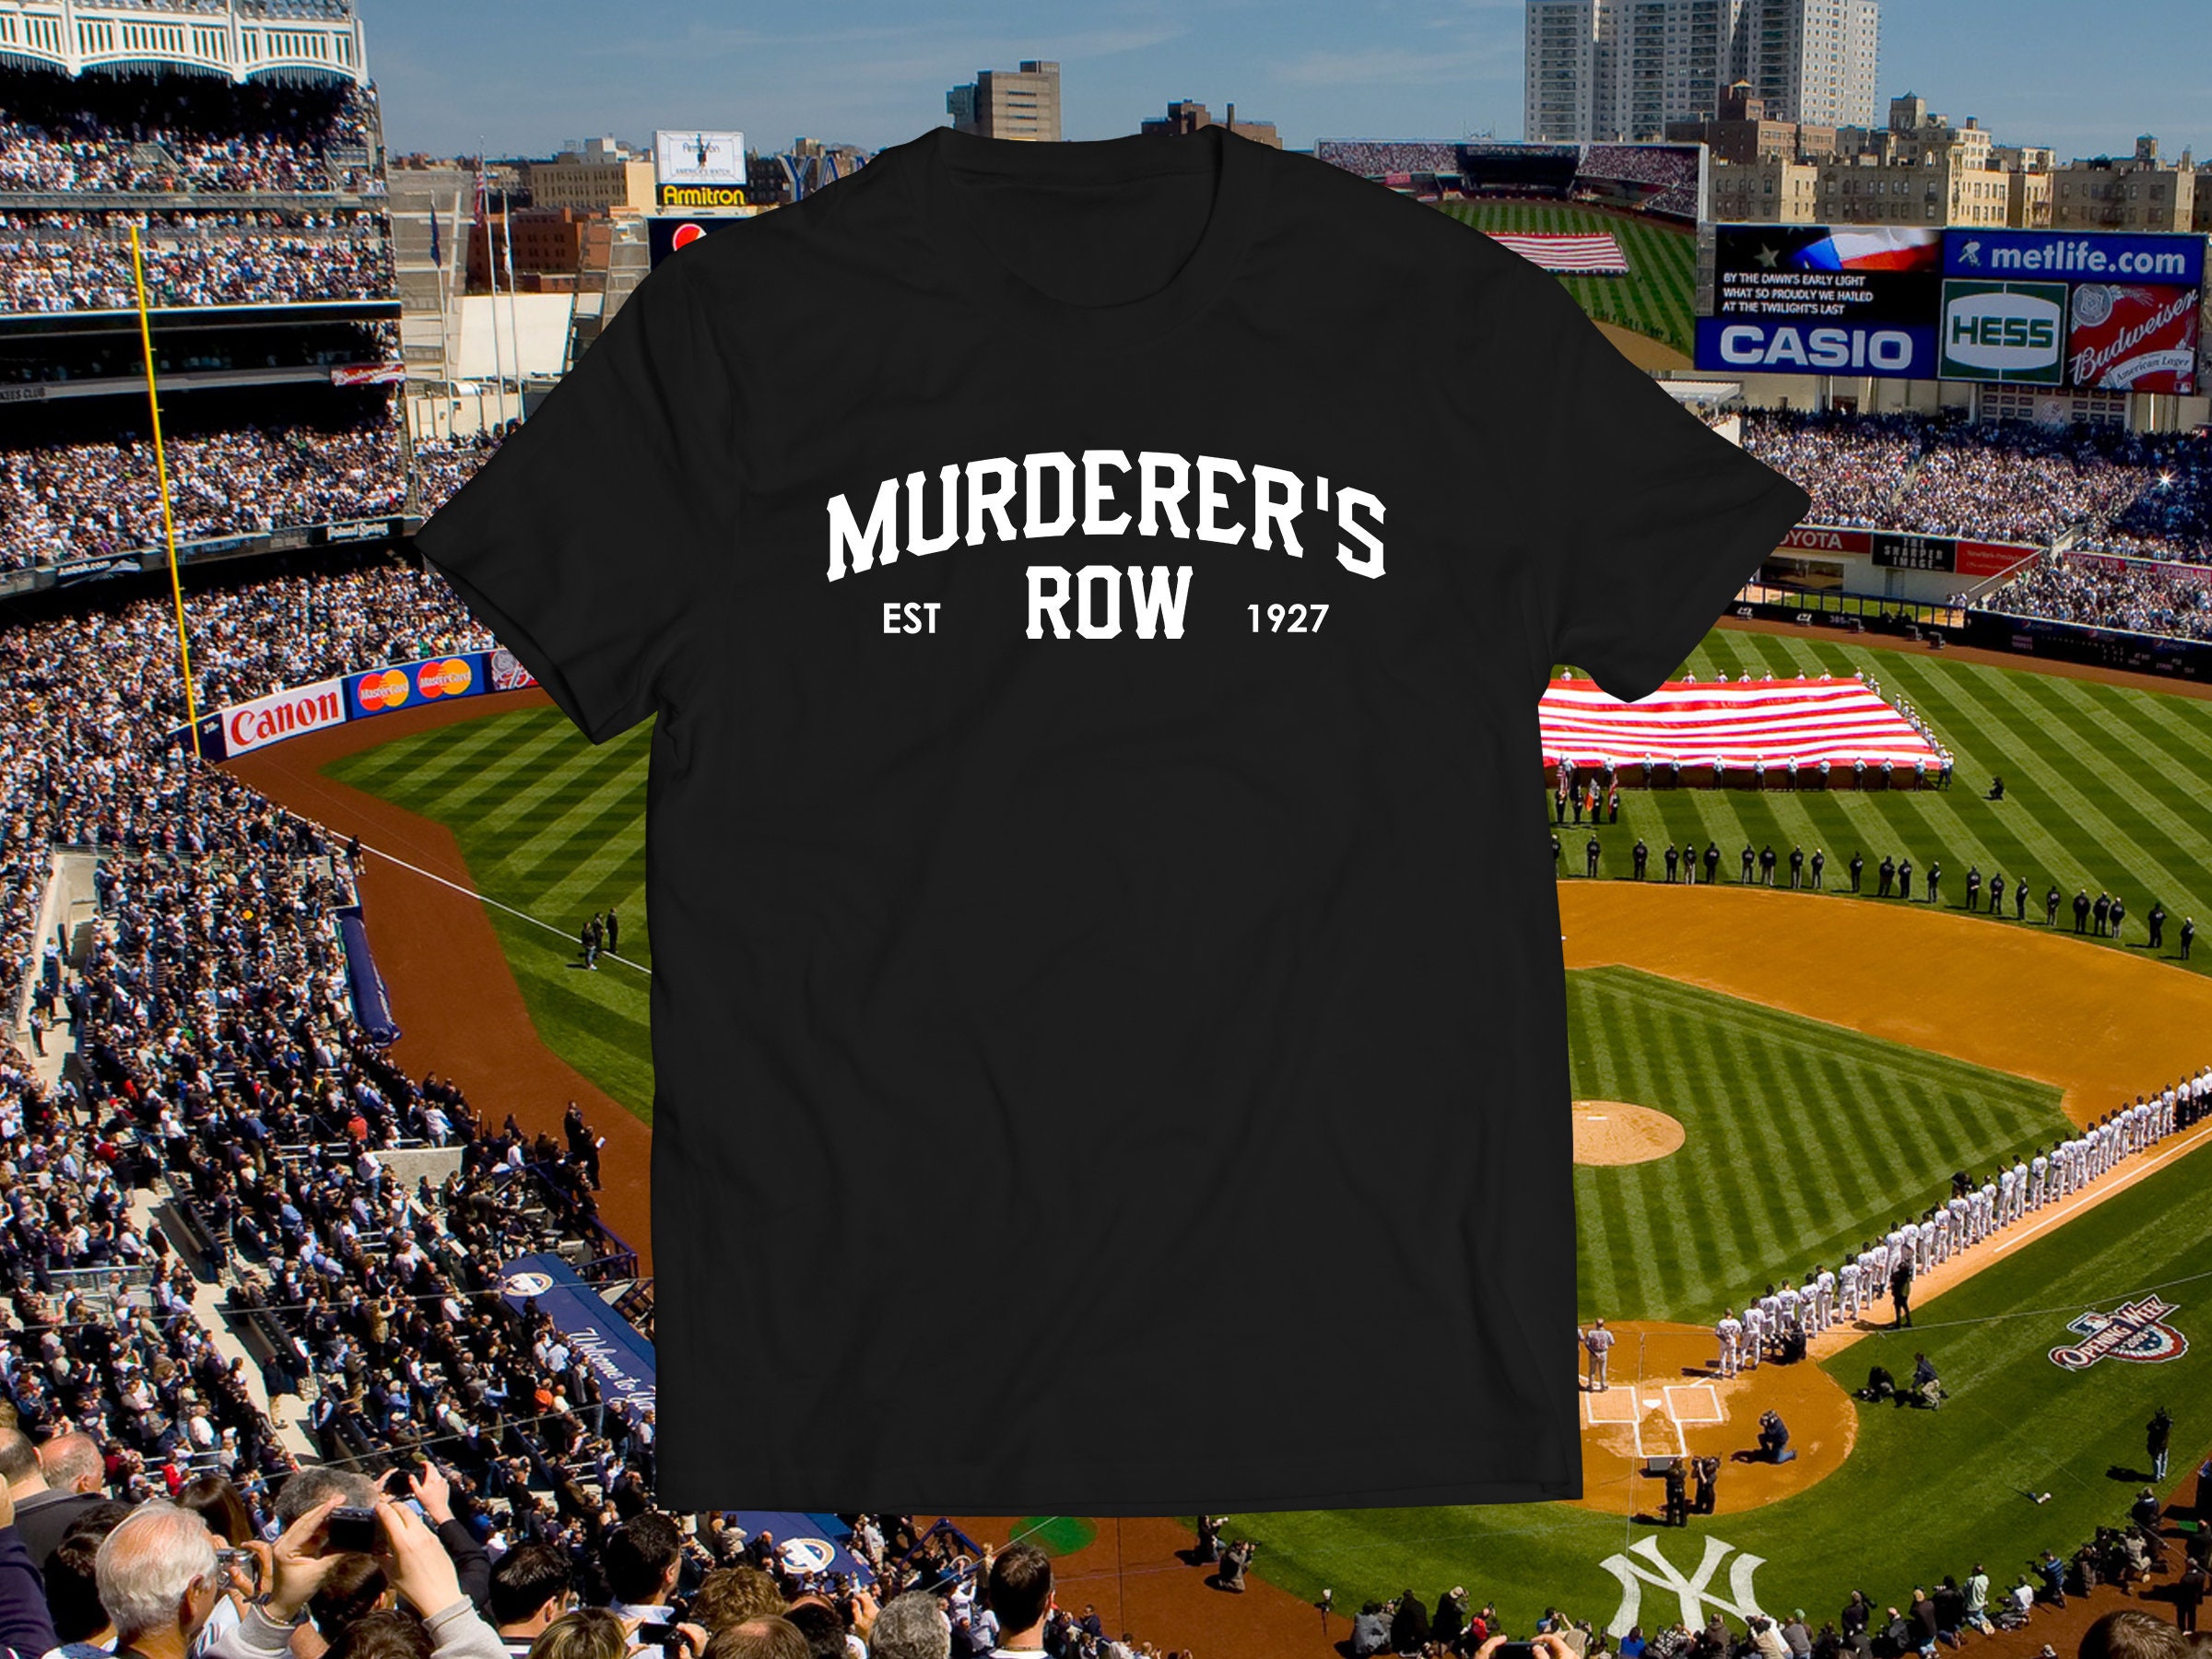 Murderers' Row: The 1927 New York Yankees, G. H. Fleming